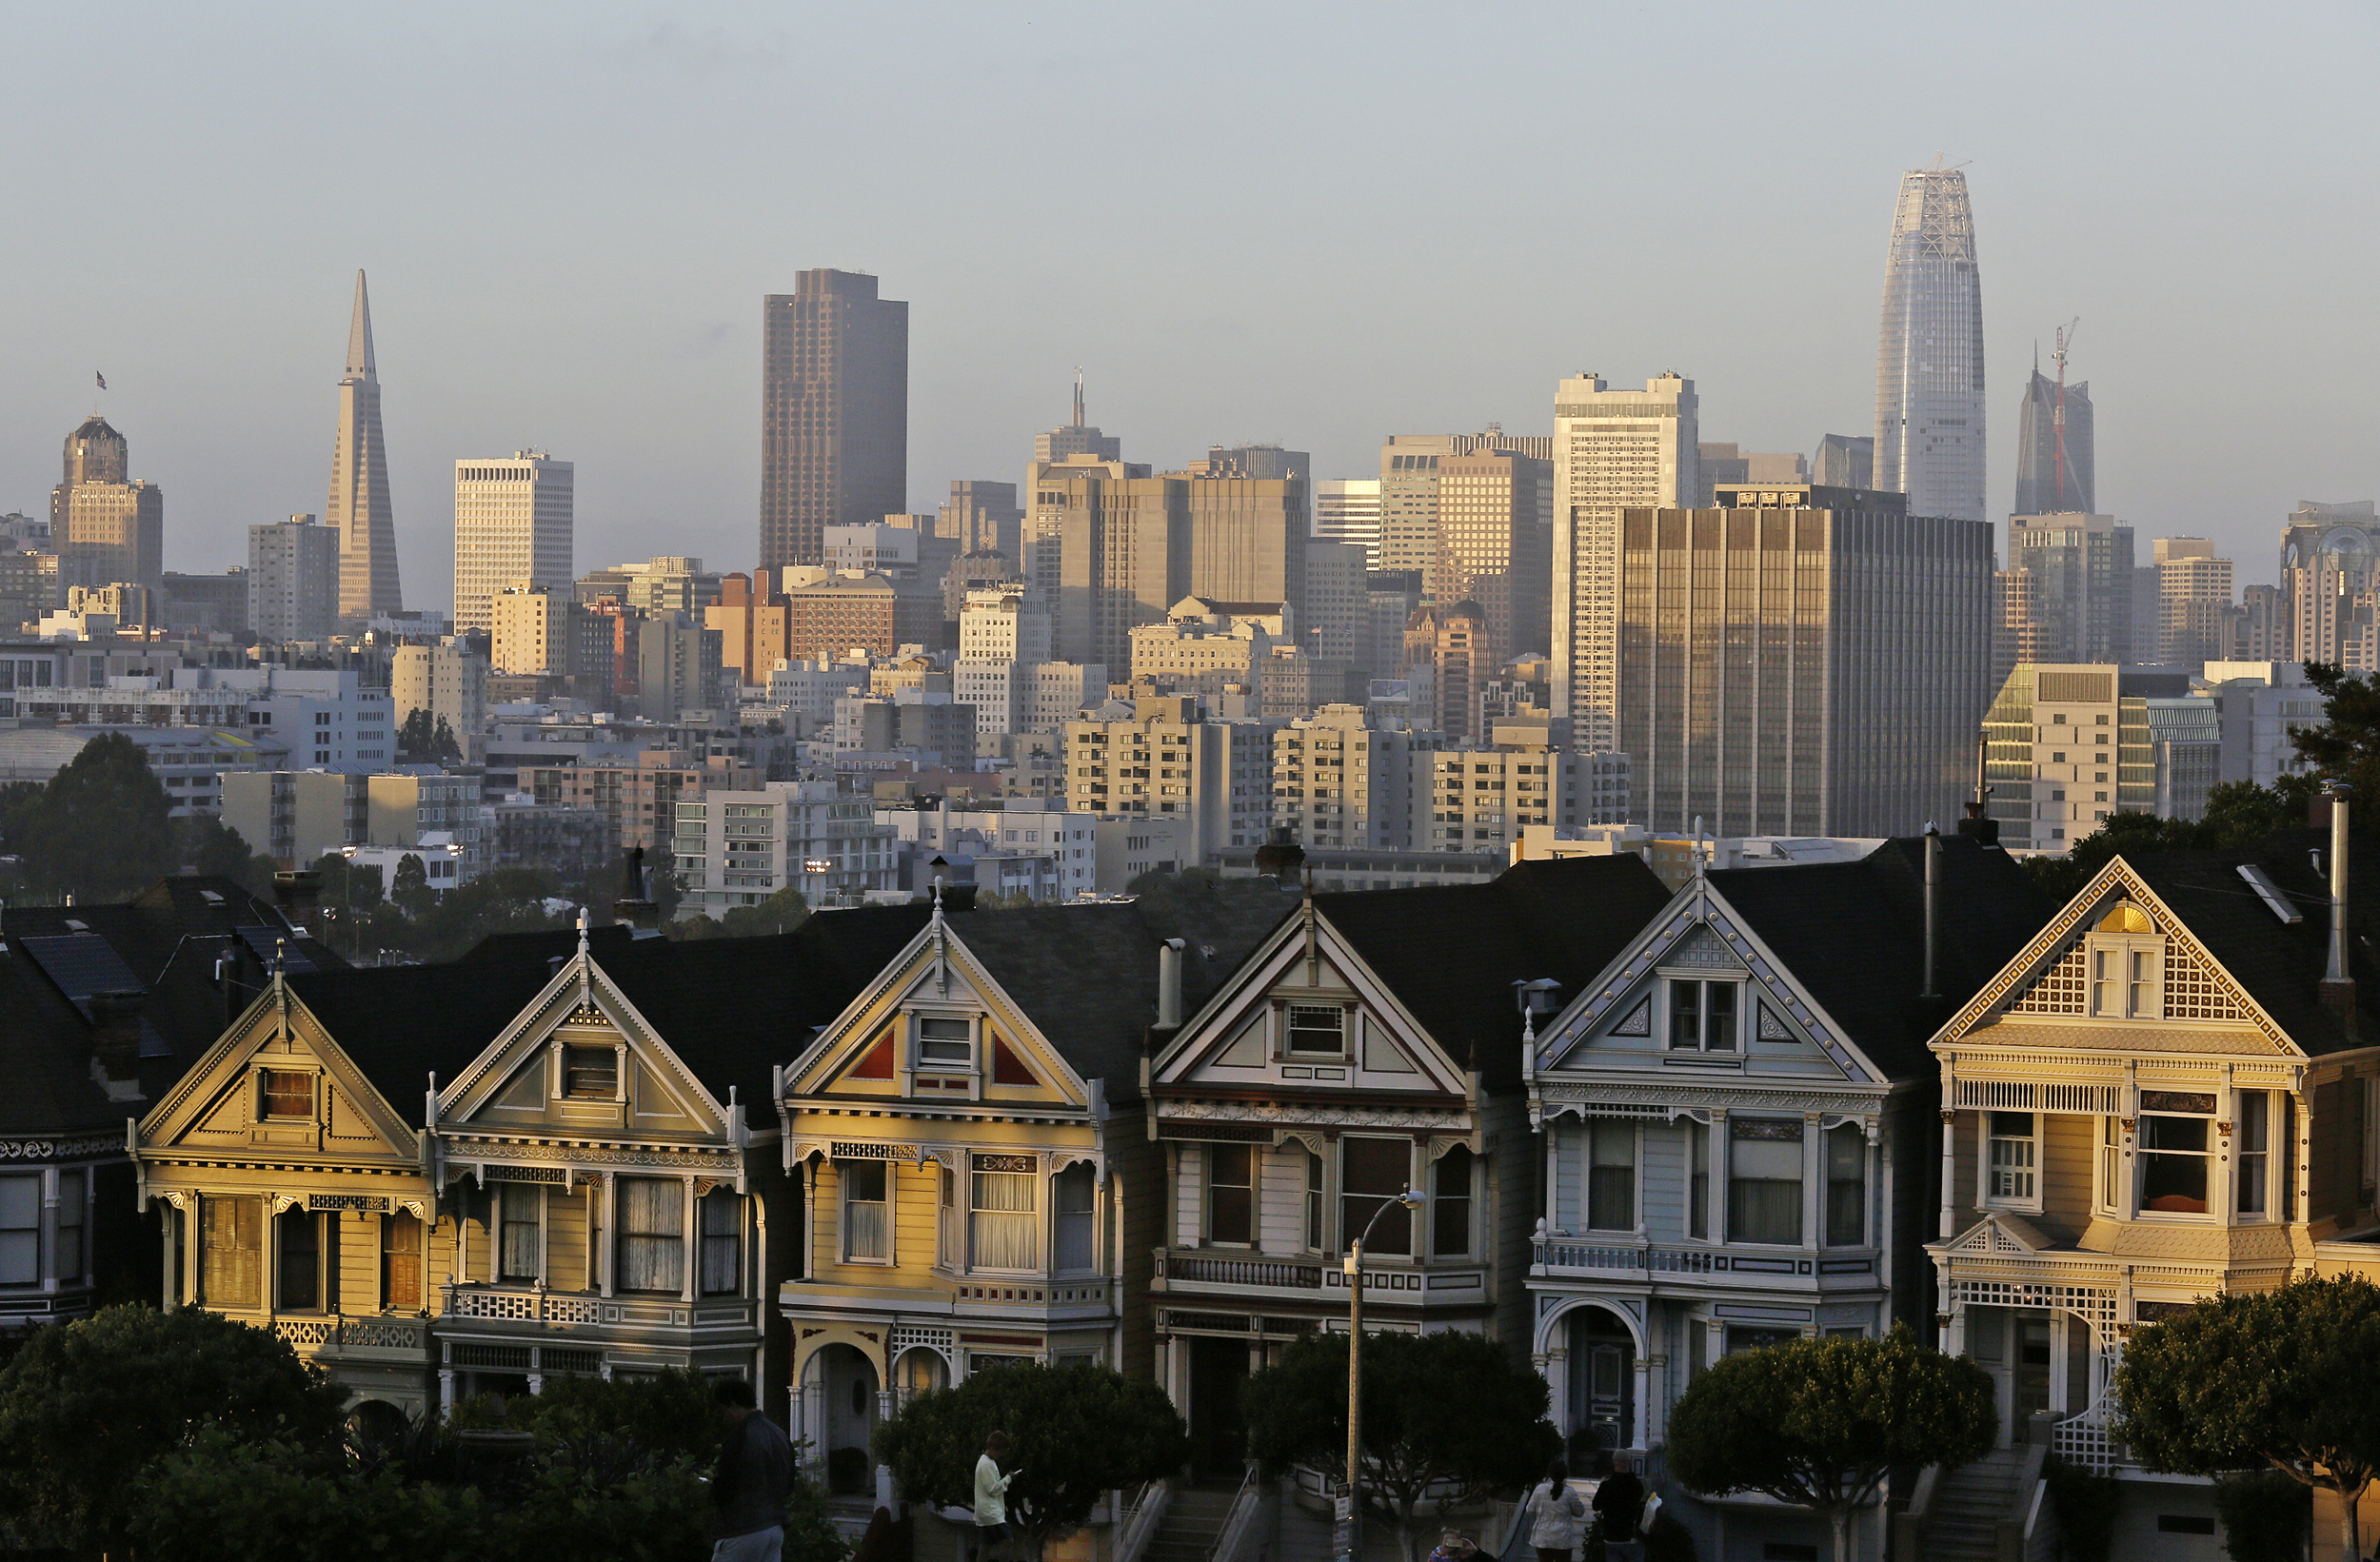 San Francisco Bay Area hit by magnitude-4.4 earthquake